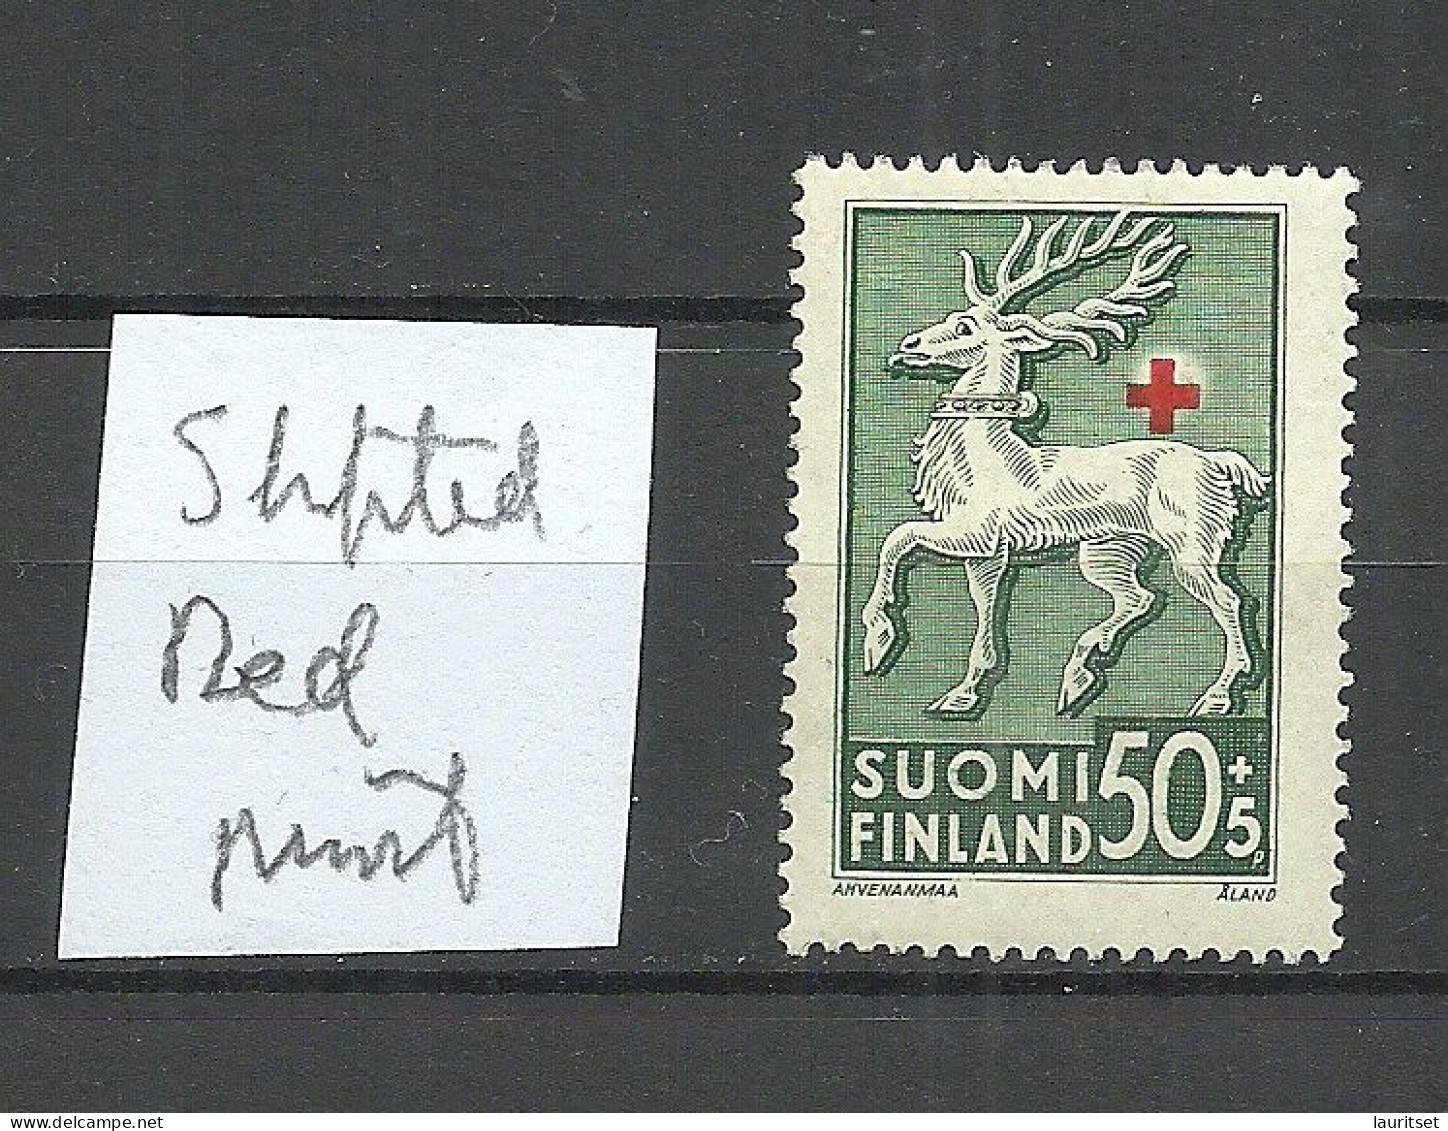 FINLAND FINNLAND 1942 Michel 254 * Error Variety Abart = Shifted Red Print (cross) - Varietà E Curiosità